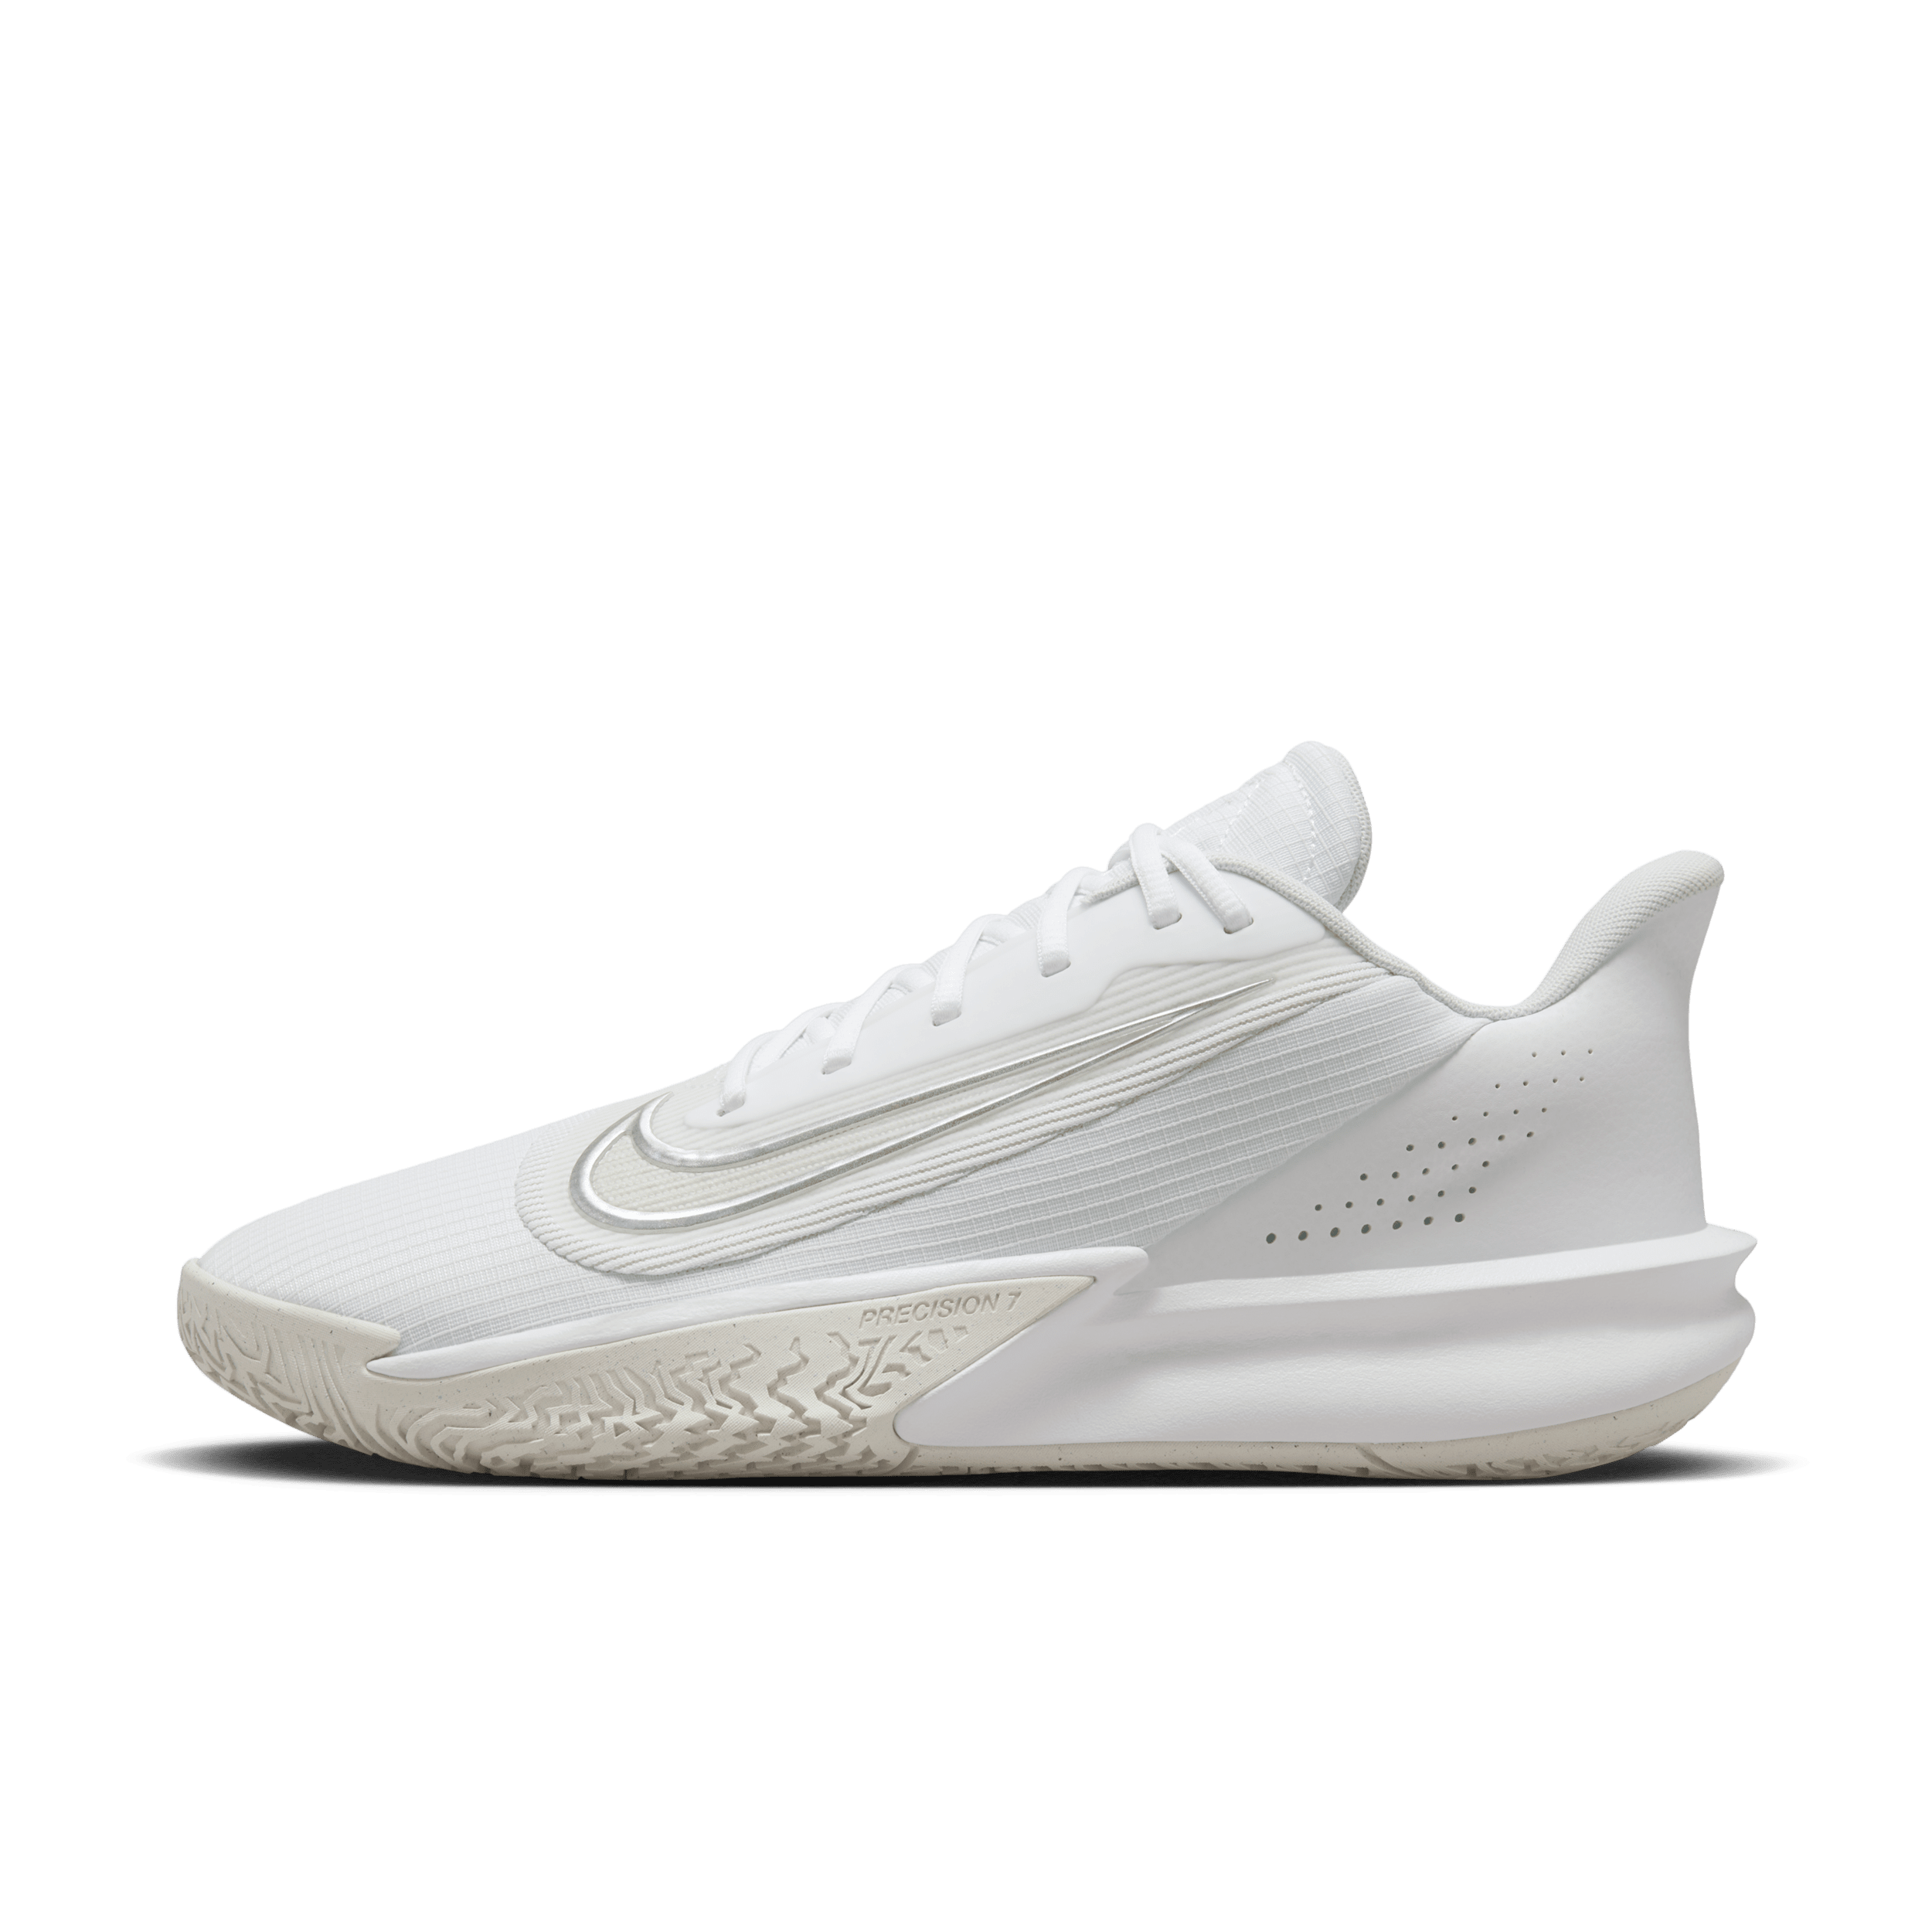 Scarpa da basket Nike Precision 7 – Uomo - Bianco